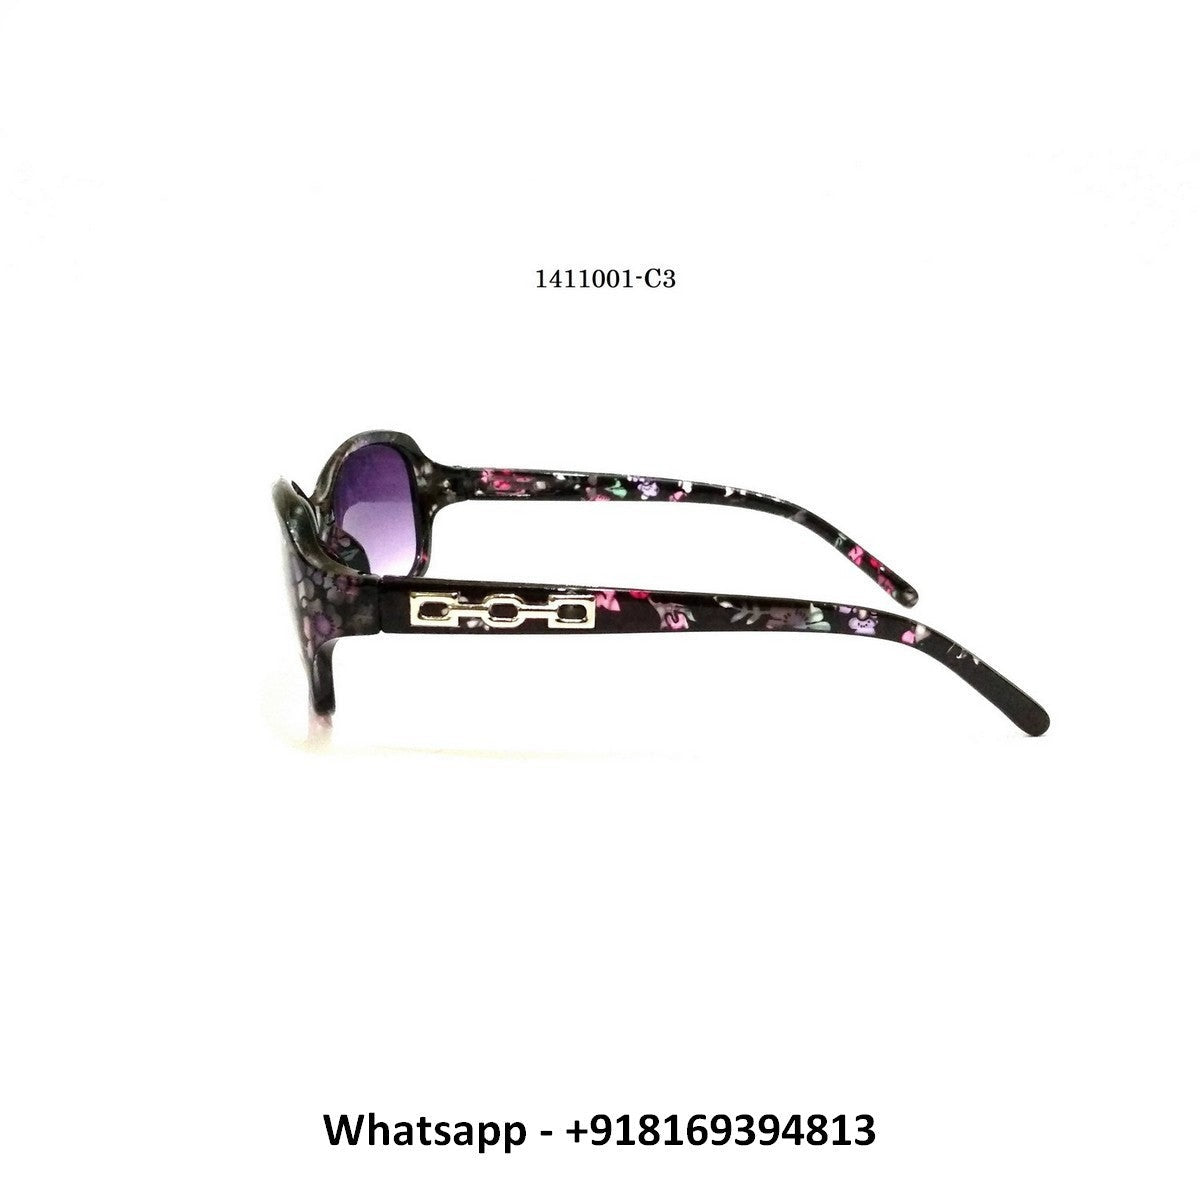 Floral Print Ladies Sunglasses for Women Model 1141001C3 - Glasses India Online